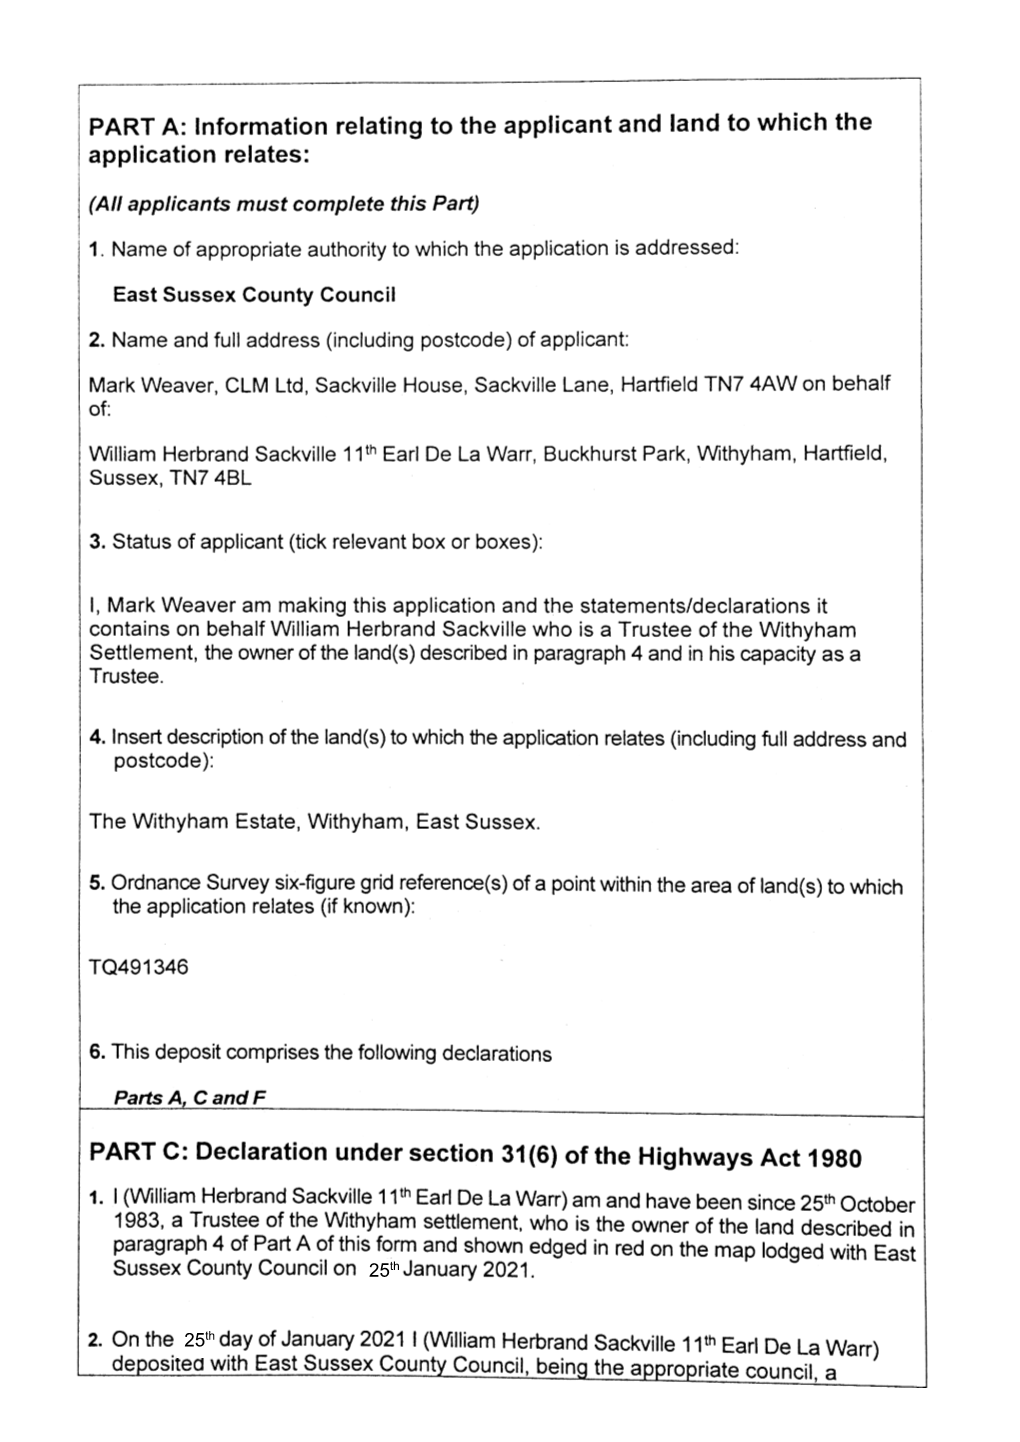 Withyham-Estate-29-January-2021-Declaration.Pdf